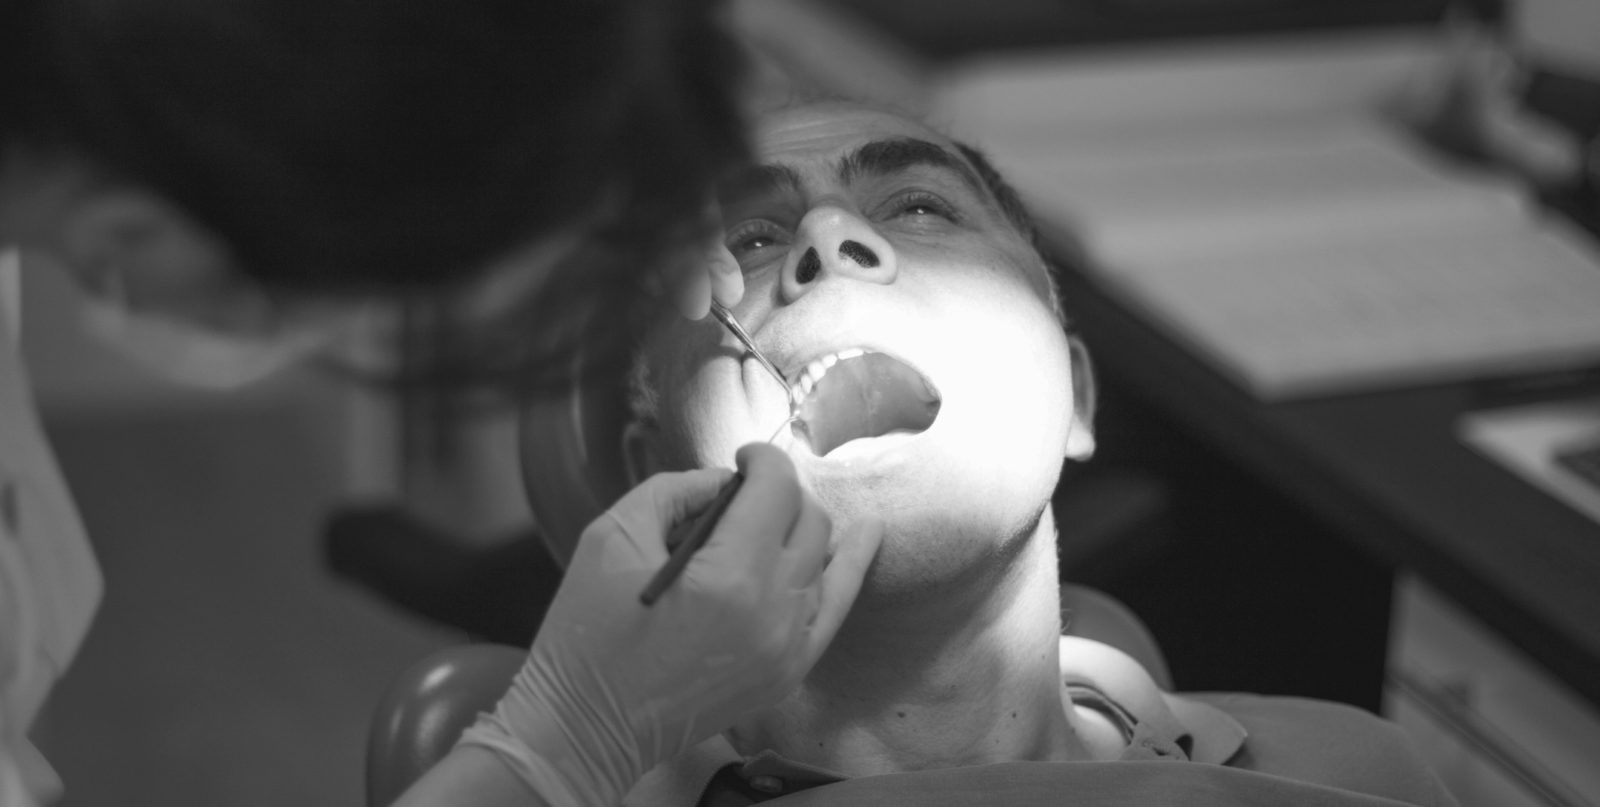 Private dental care fails millions in Ontario - Healthy Debate